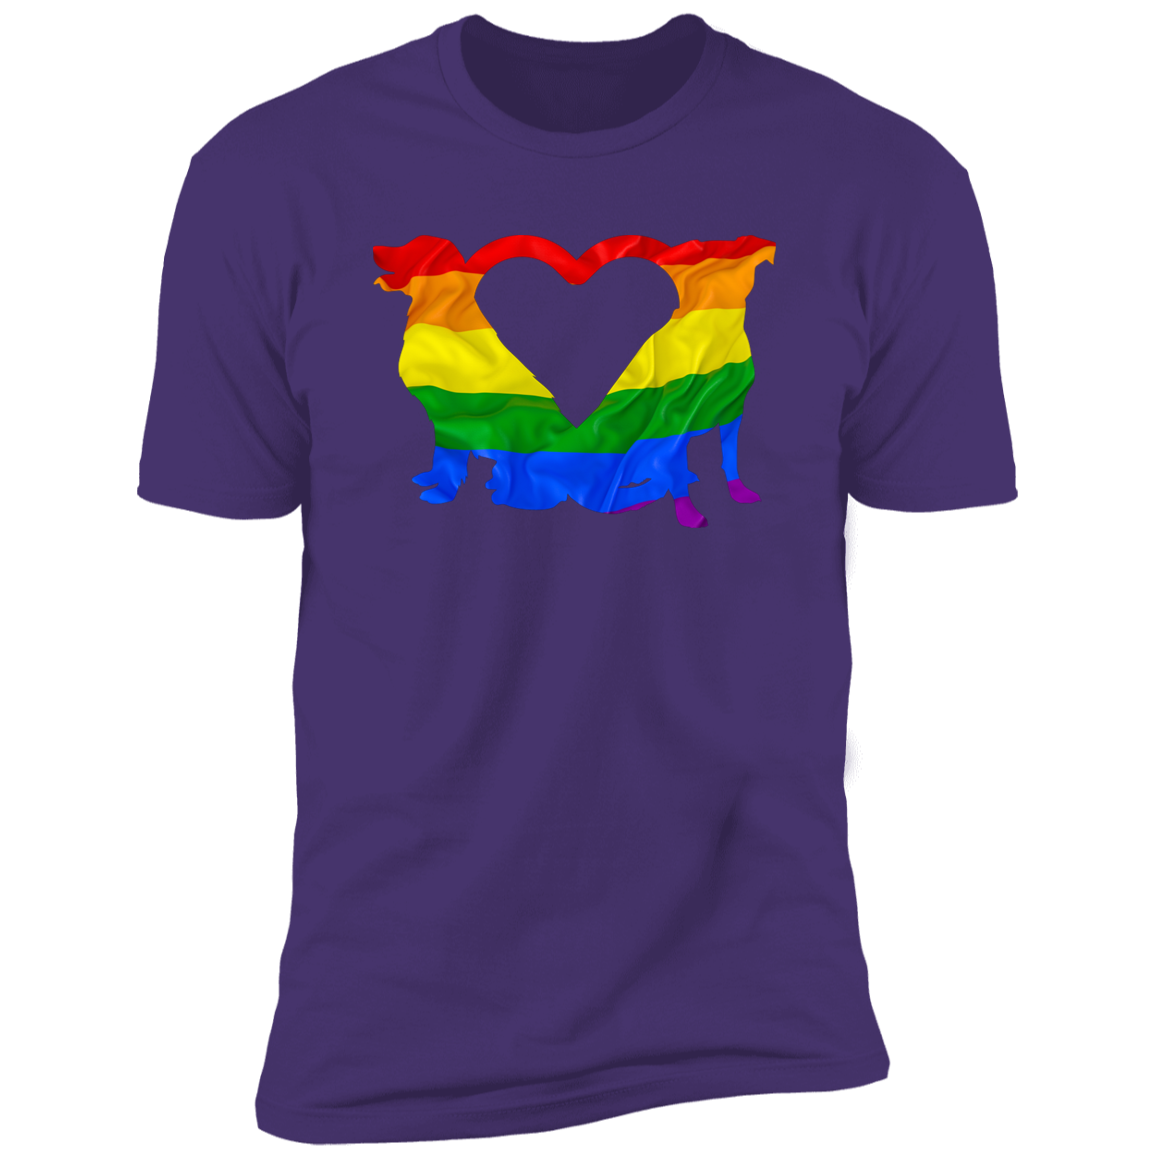 Dog Pride, Dog Pride shirt for humas, in purple rush